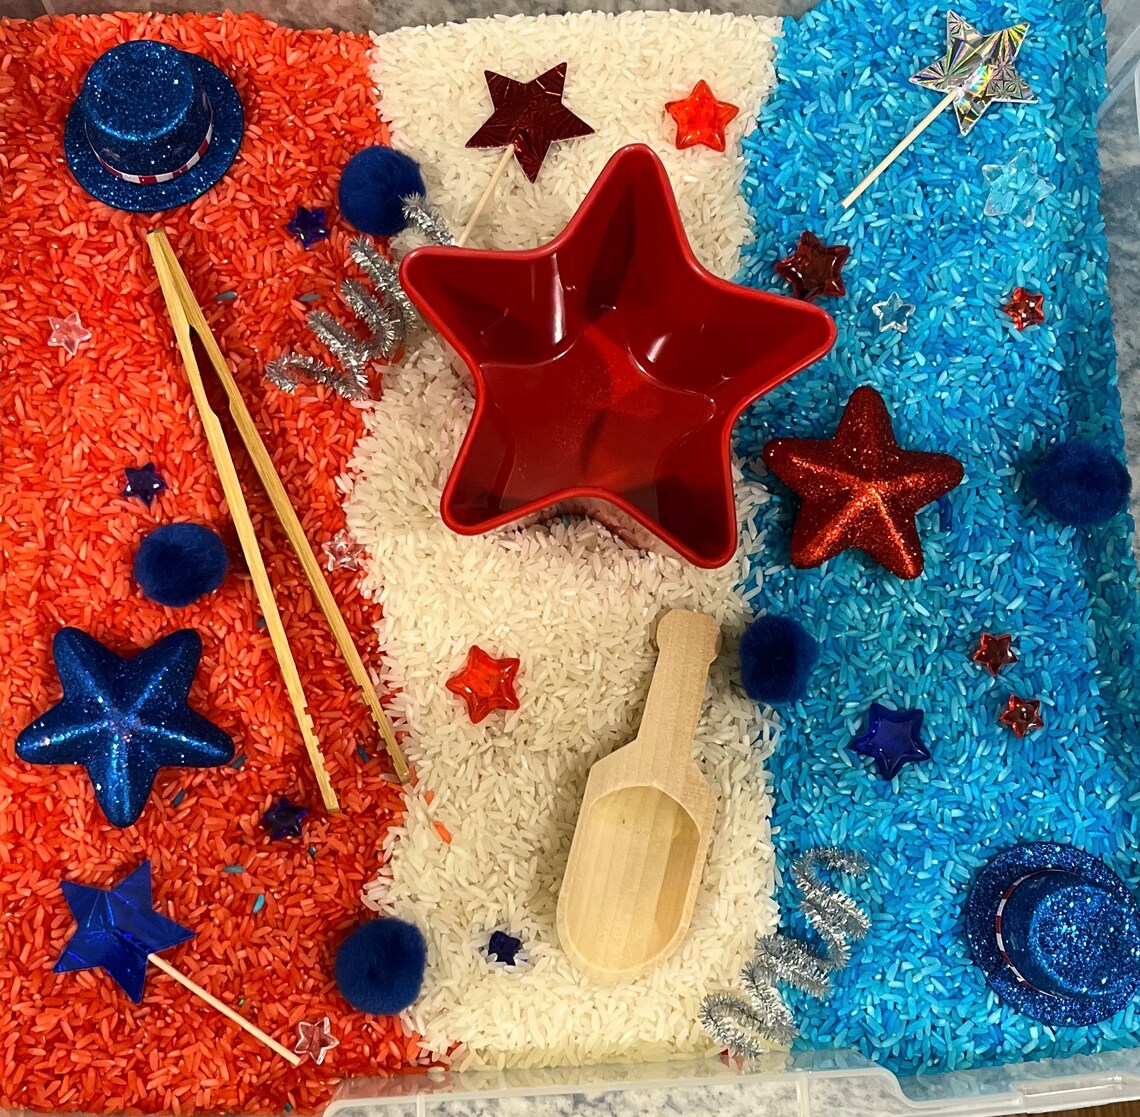 Make a Memorial Day Patriotic Sensory Bin at Learning Express Toys